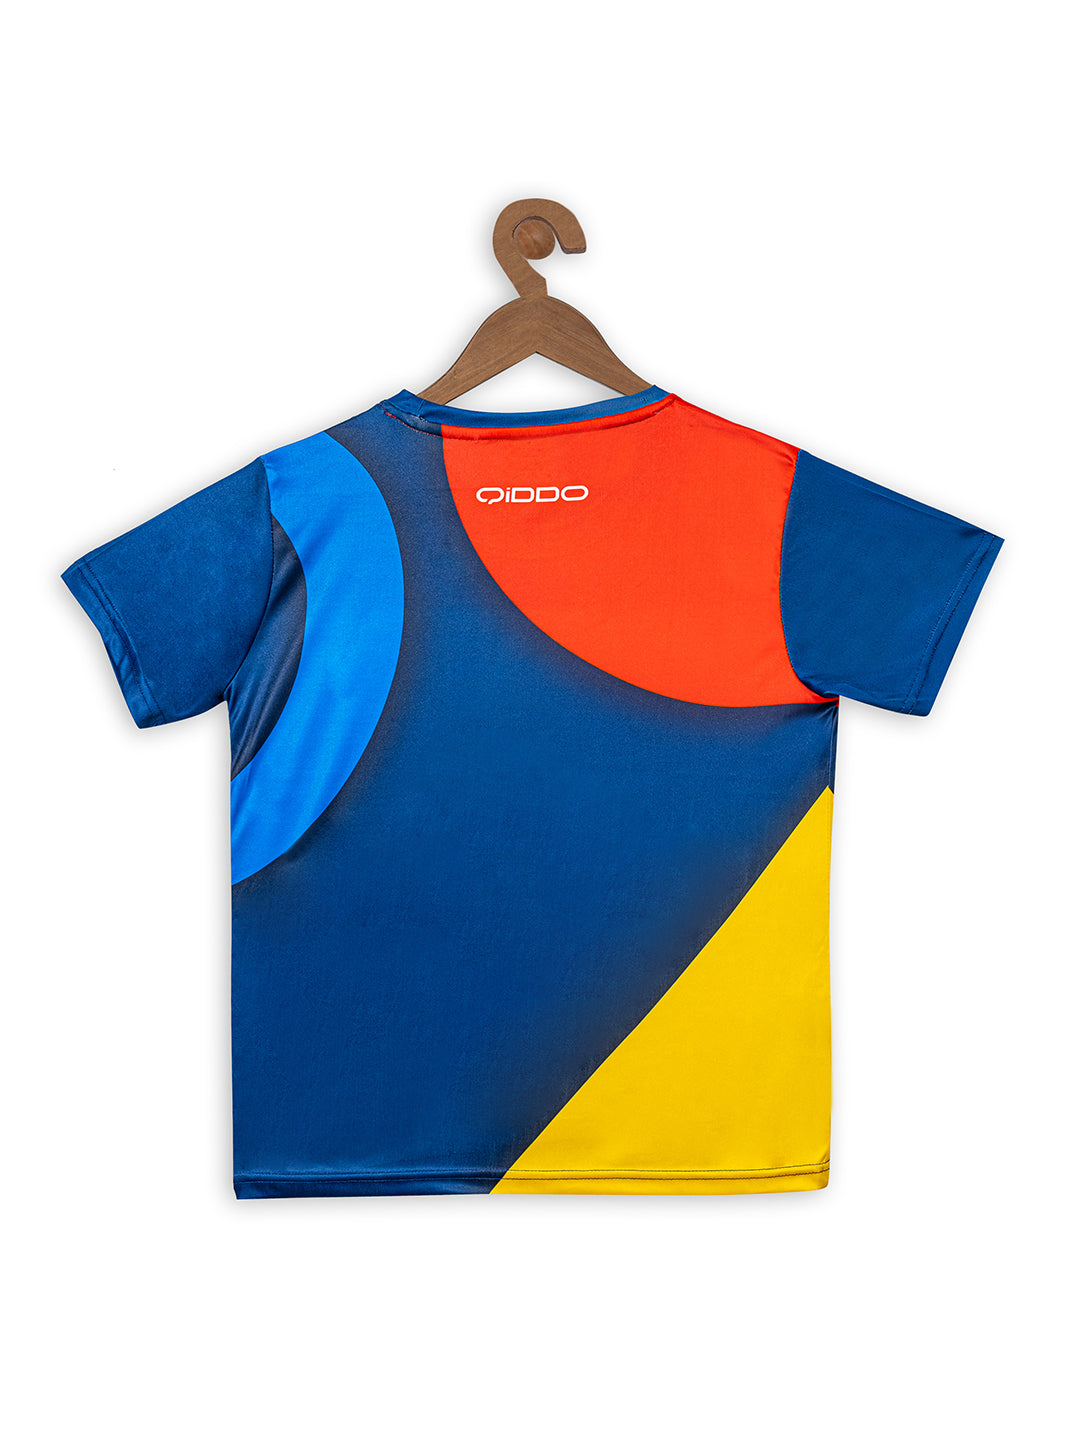 Colourful Geometric T-shirt